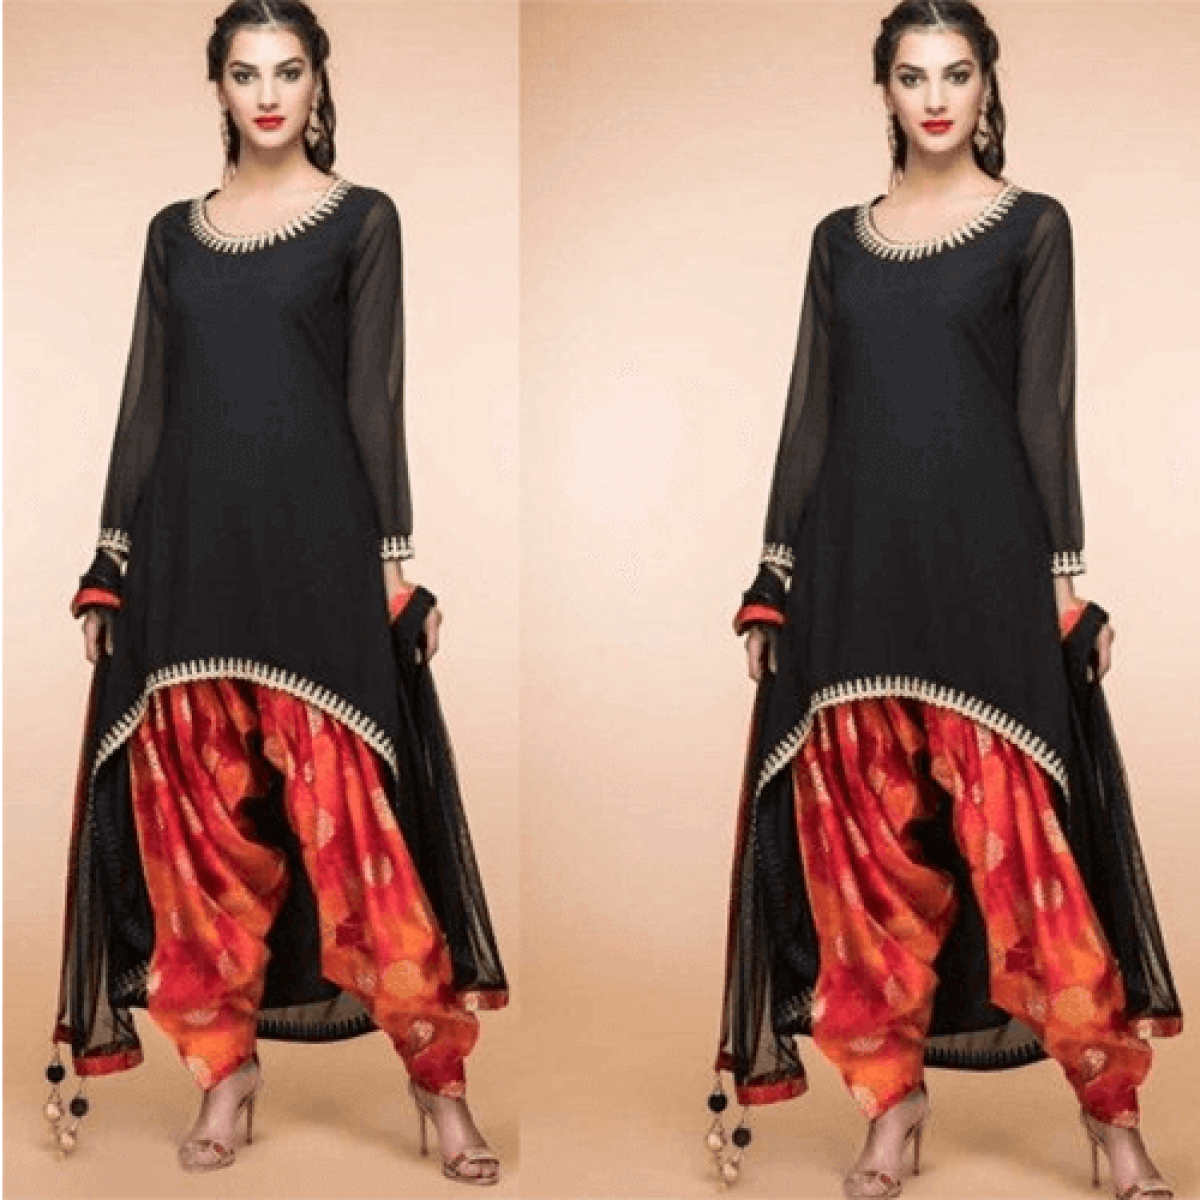 Patiala Salwar Suit | Punjabi Patiala Suit Designs For Wedding